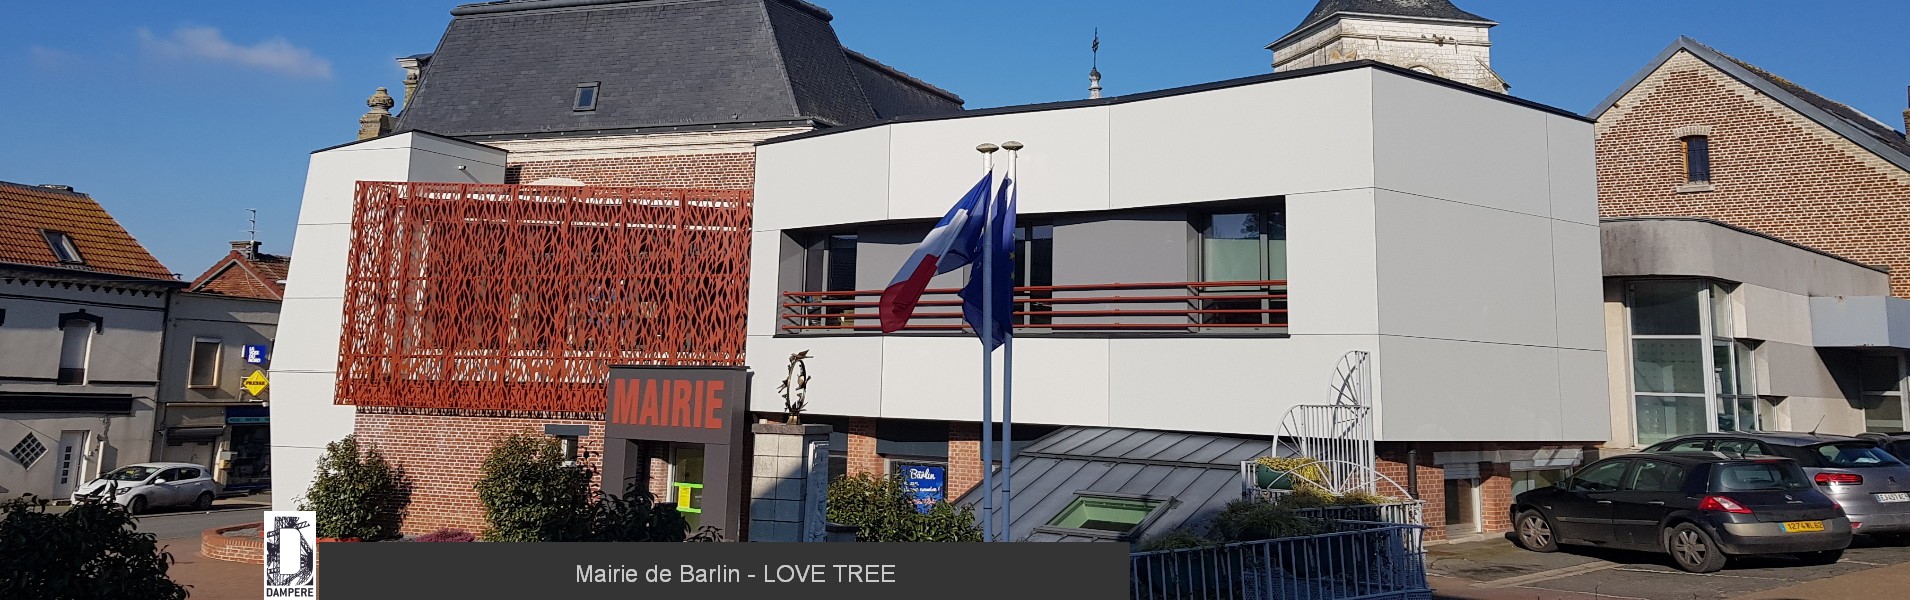 Mairie de Barlin LOVE TREE 3 1